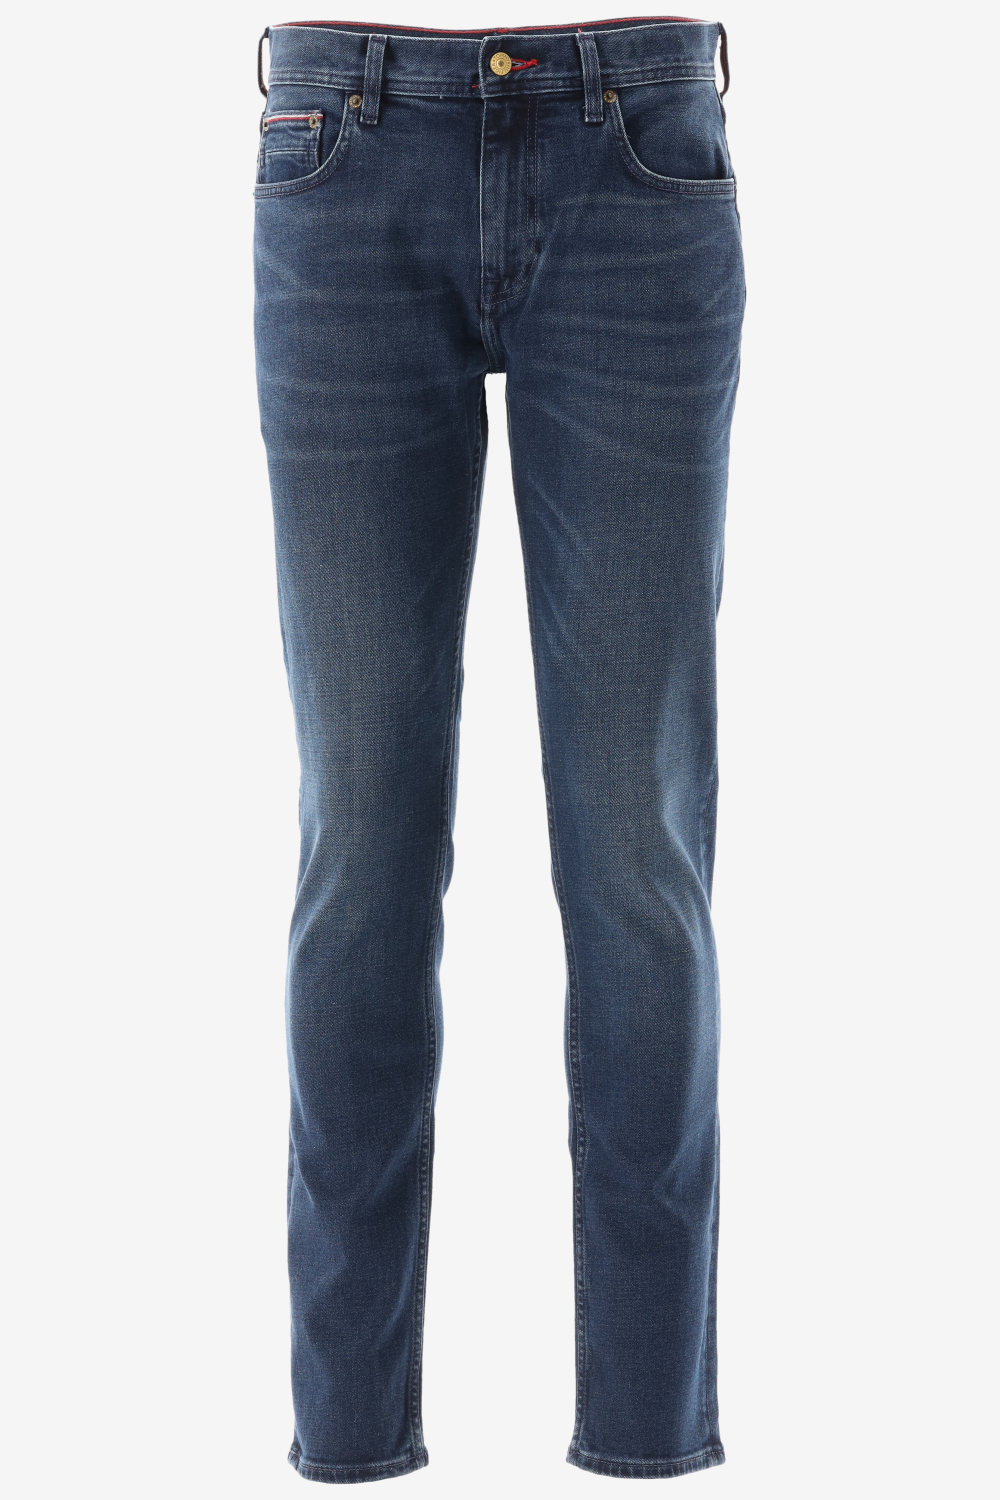 Tommy hilfiger straight fit denton straight jeans maat 29-L32